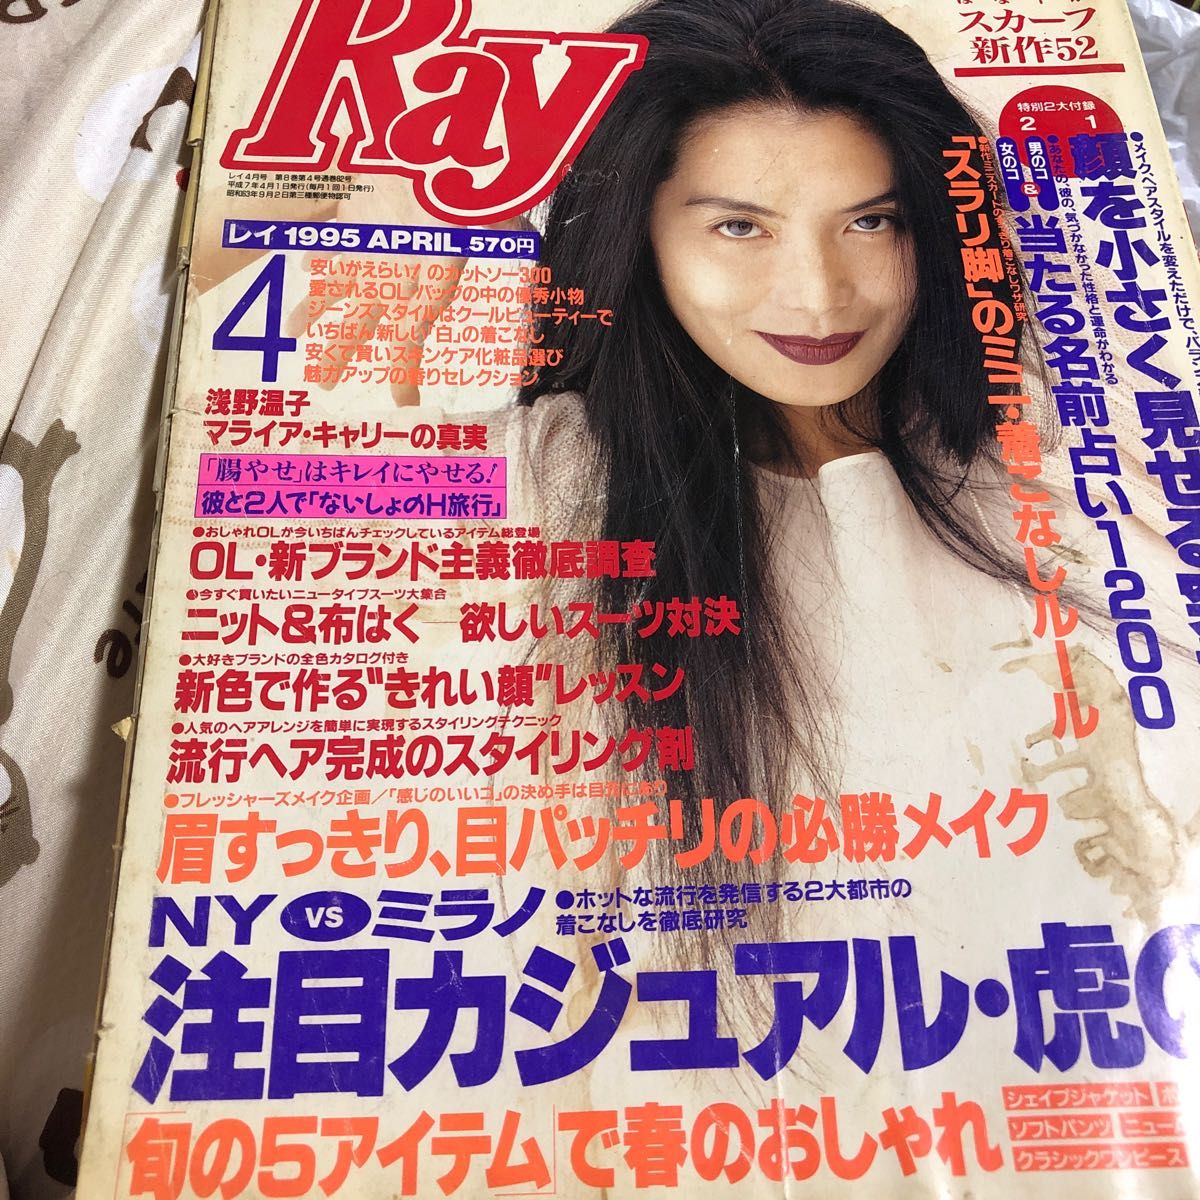 Ray1985’4 レイ ファッション誌 90年代 浅野温子